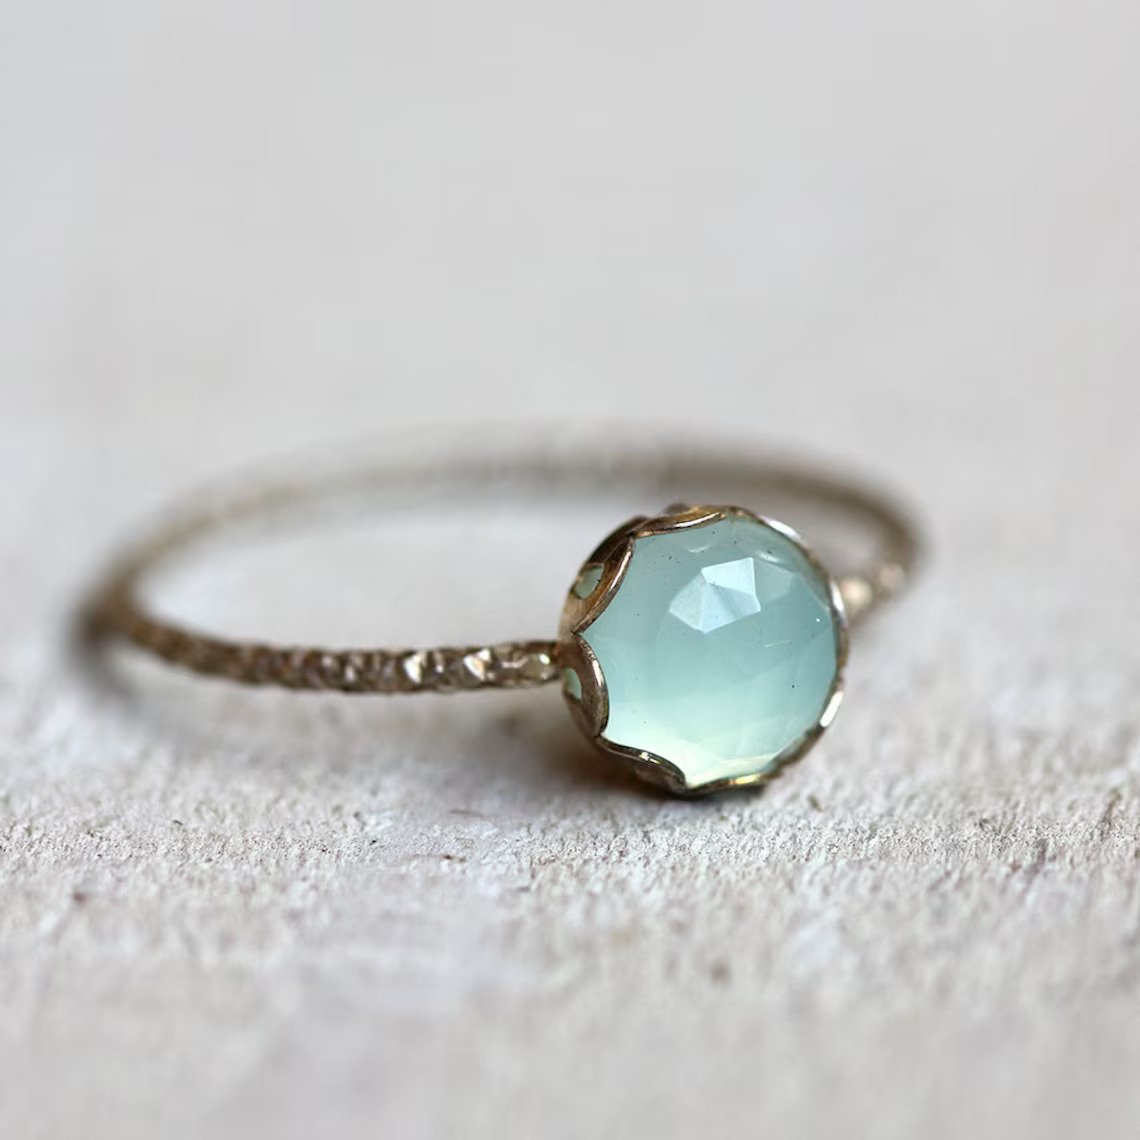 Blue chalcedony gemstone ring